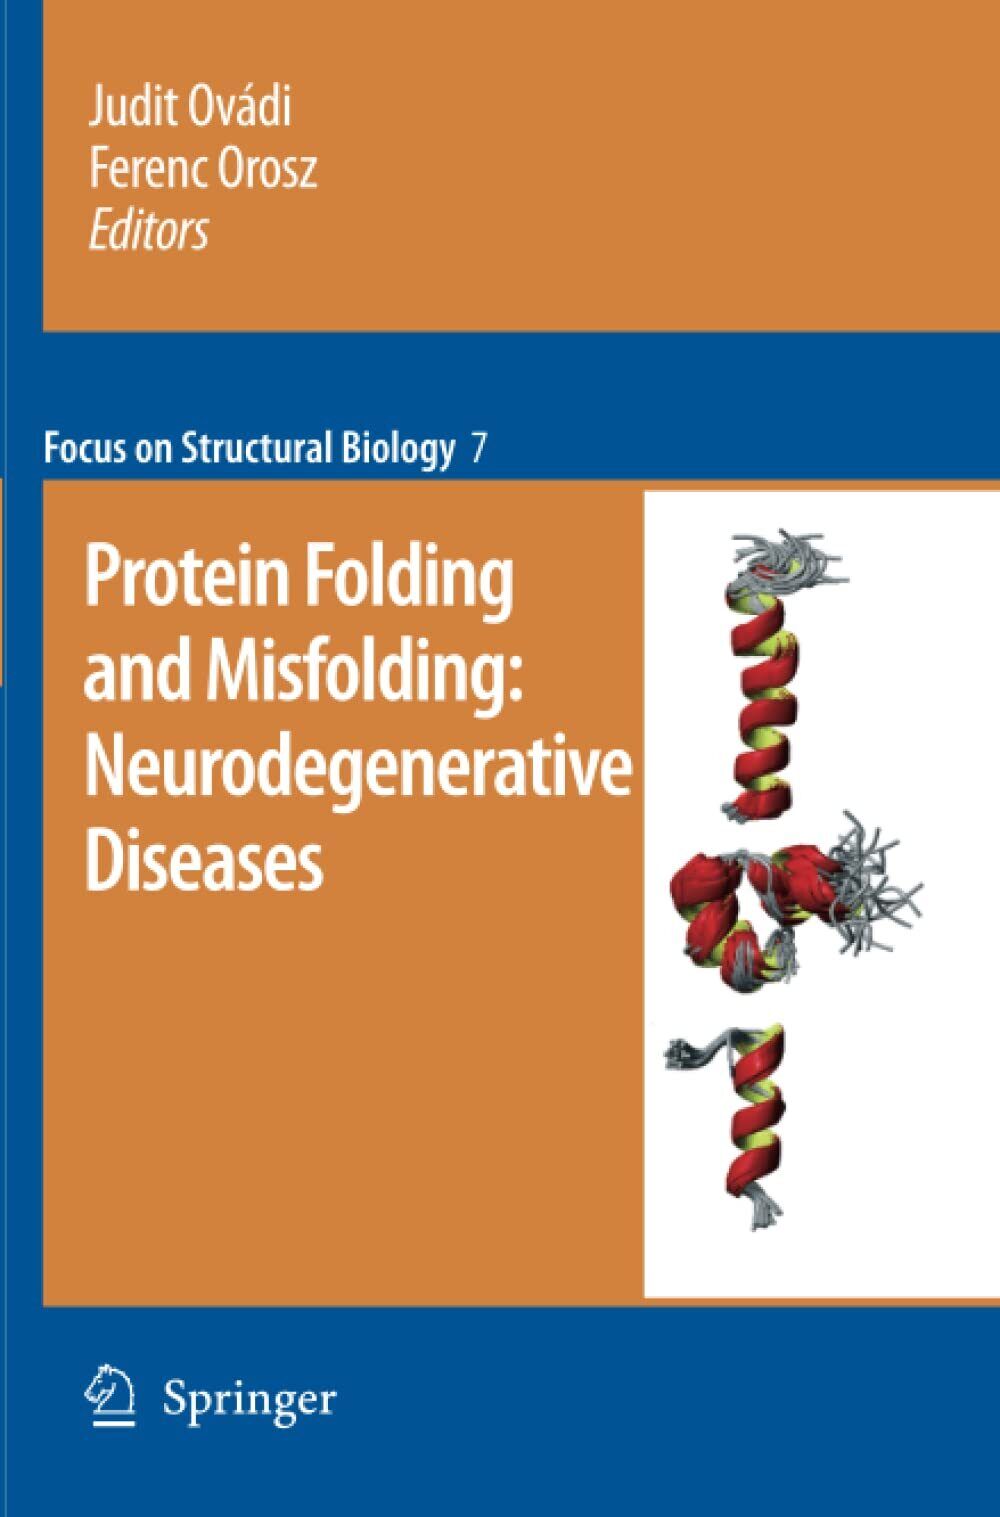 Protein folding and misfolding - Judit Ov?di - Springer, 2010